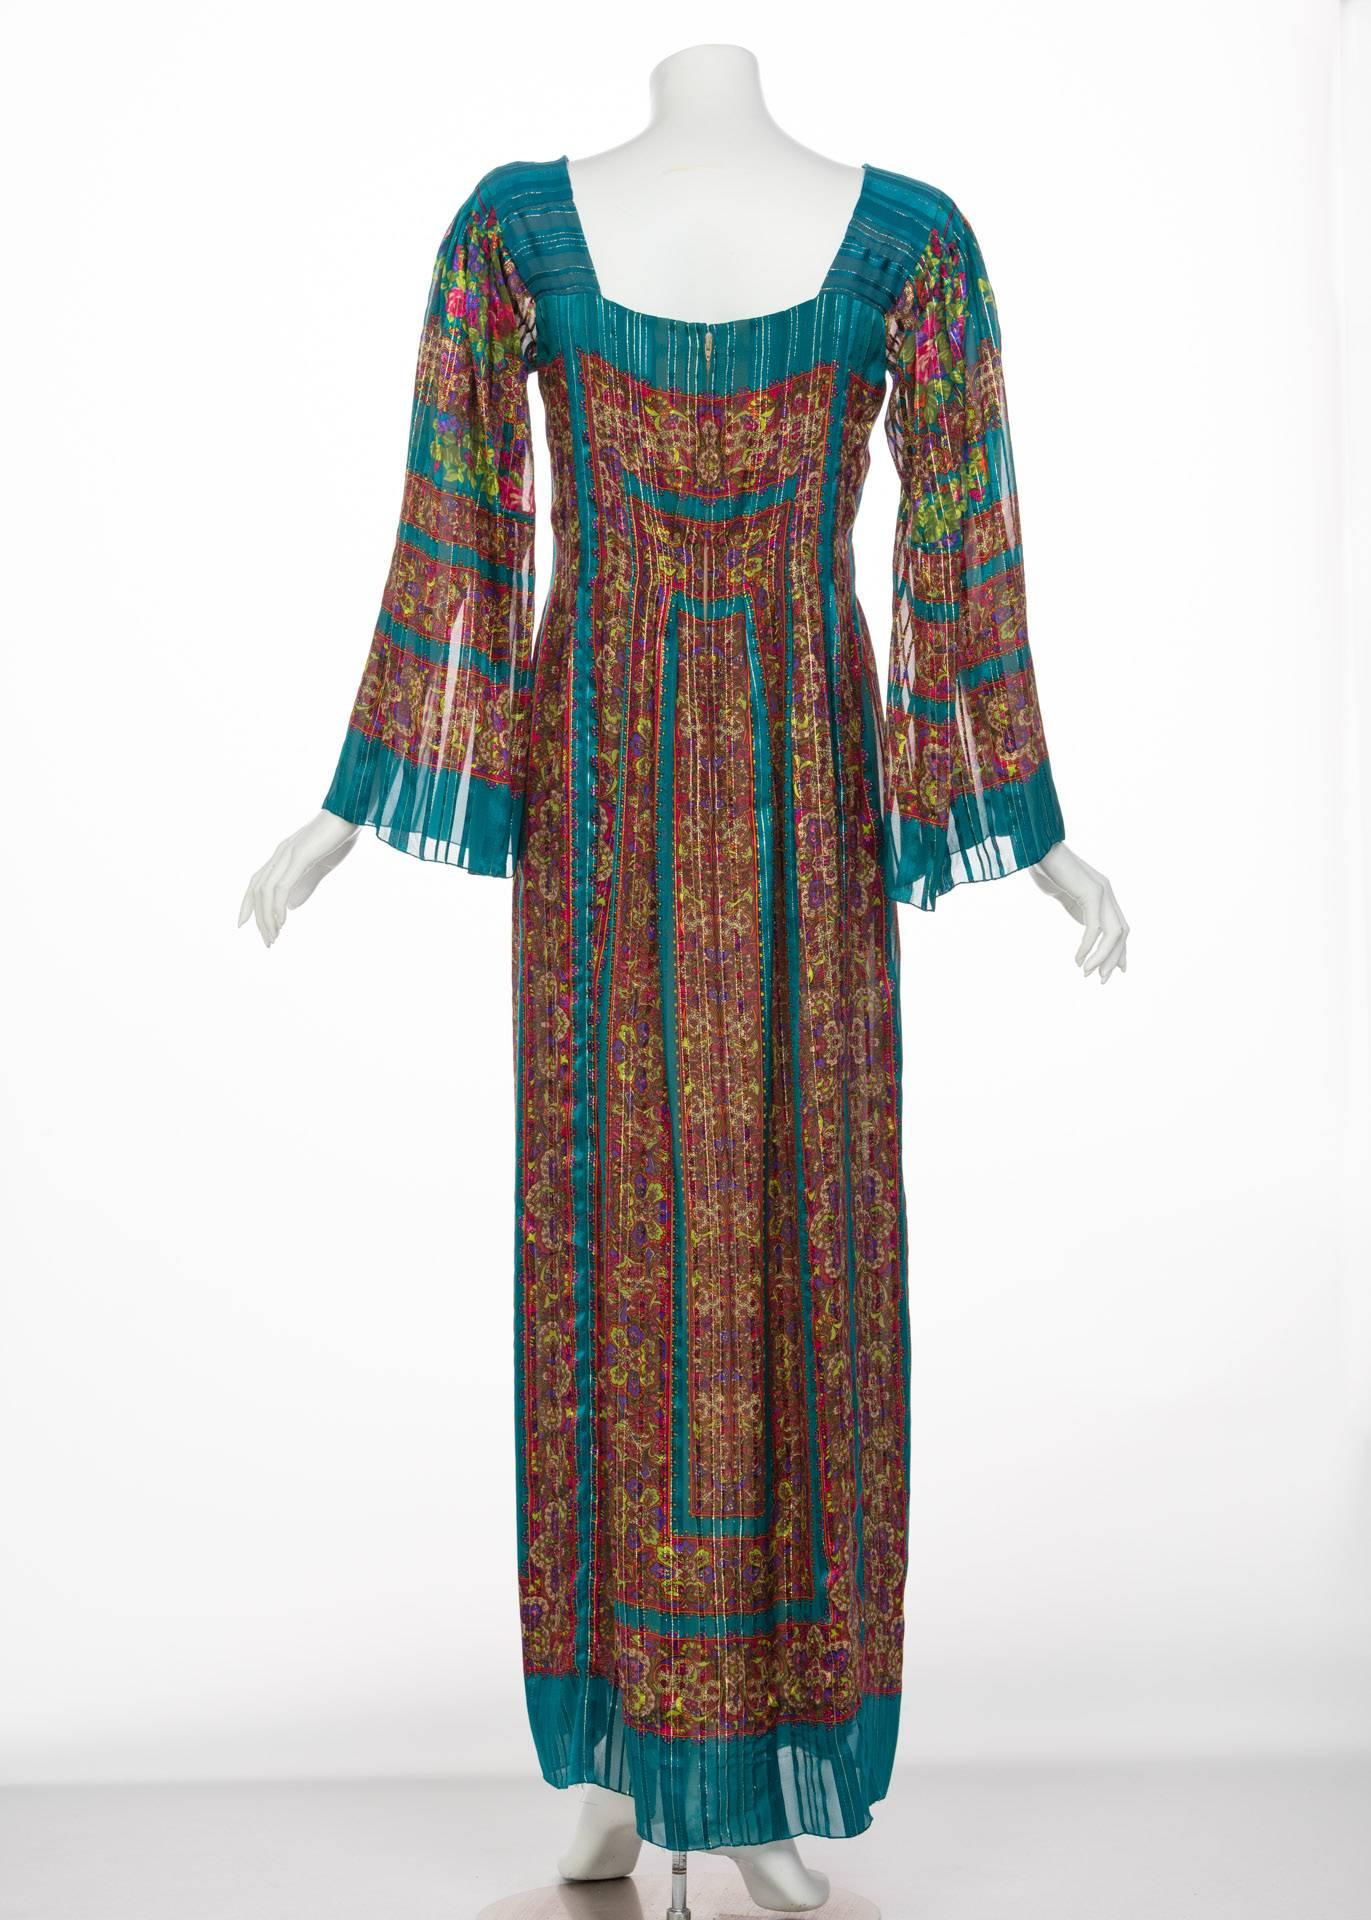 Women's Pauline Trigere Silk Floral Metallic Bell Sleeve Caftan Maxi Dress, 1970s